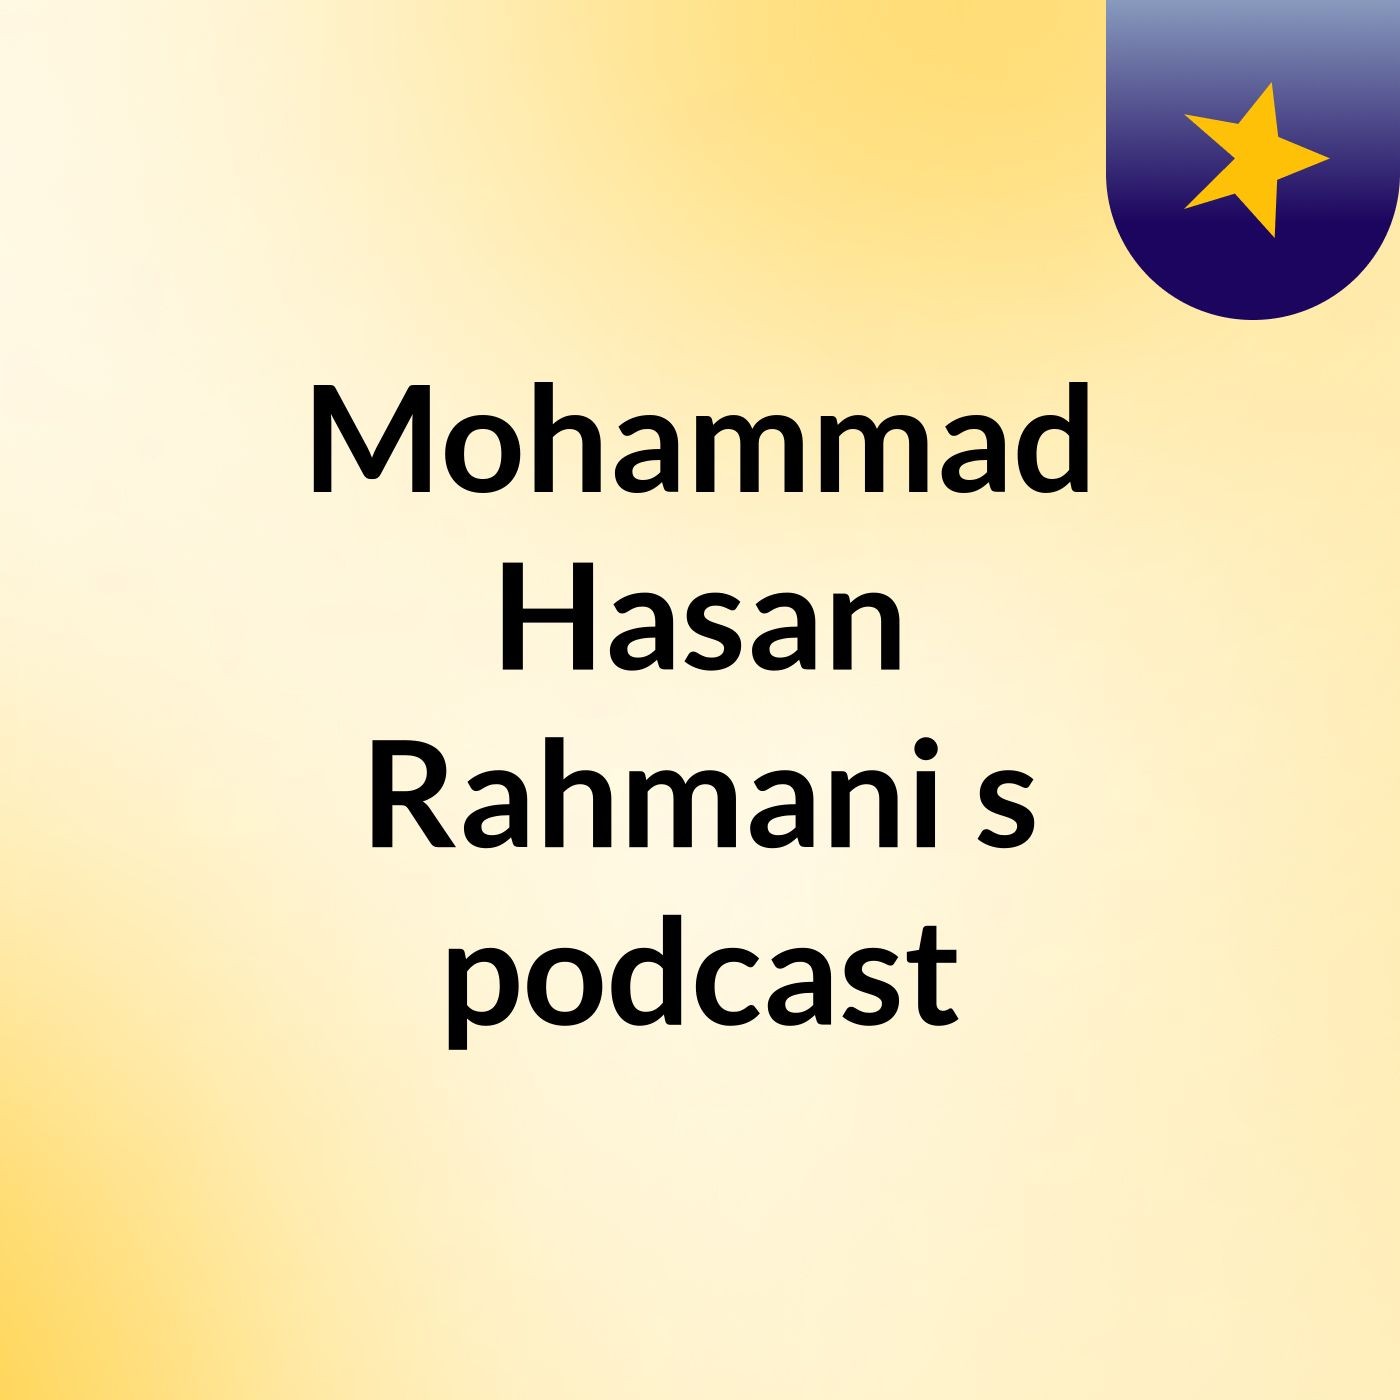 Mohammad Hasan Rahmani's podcast